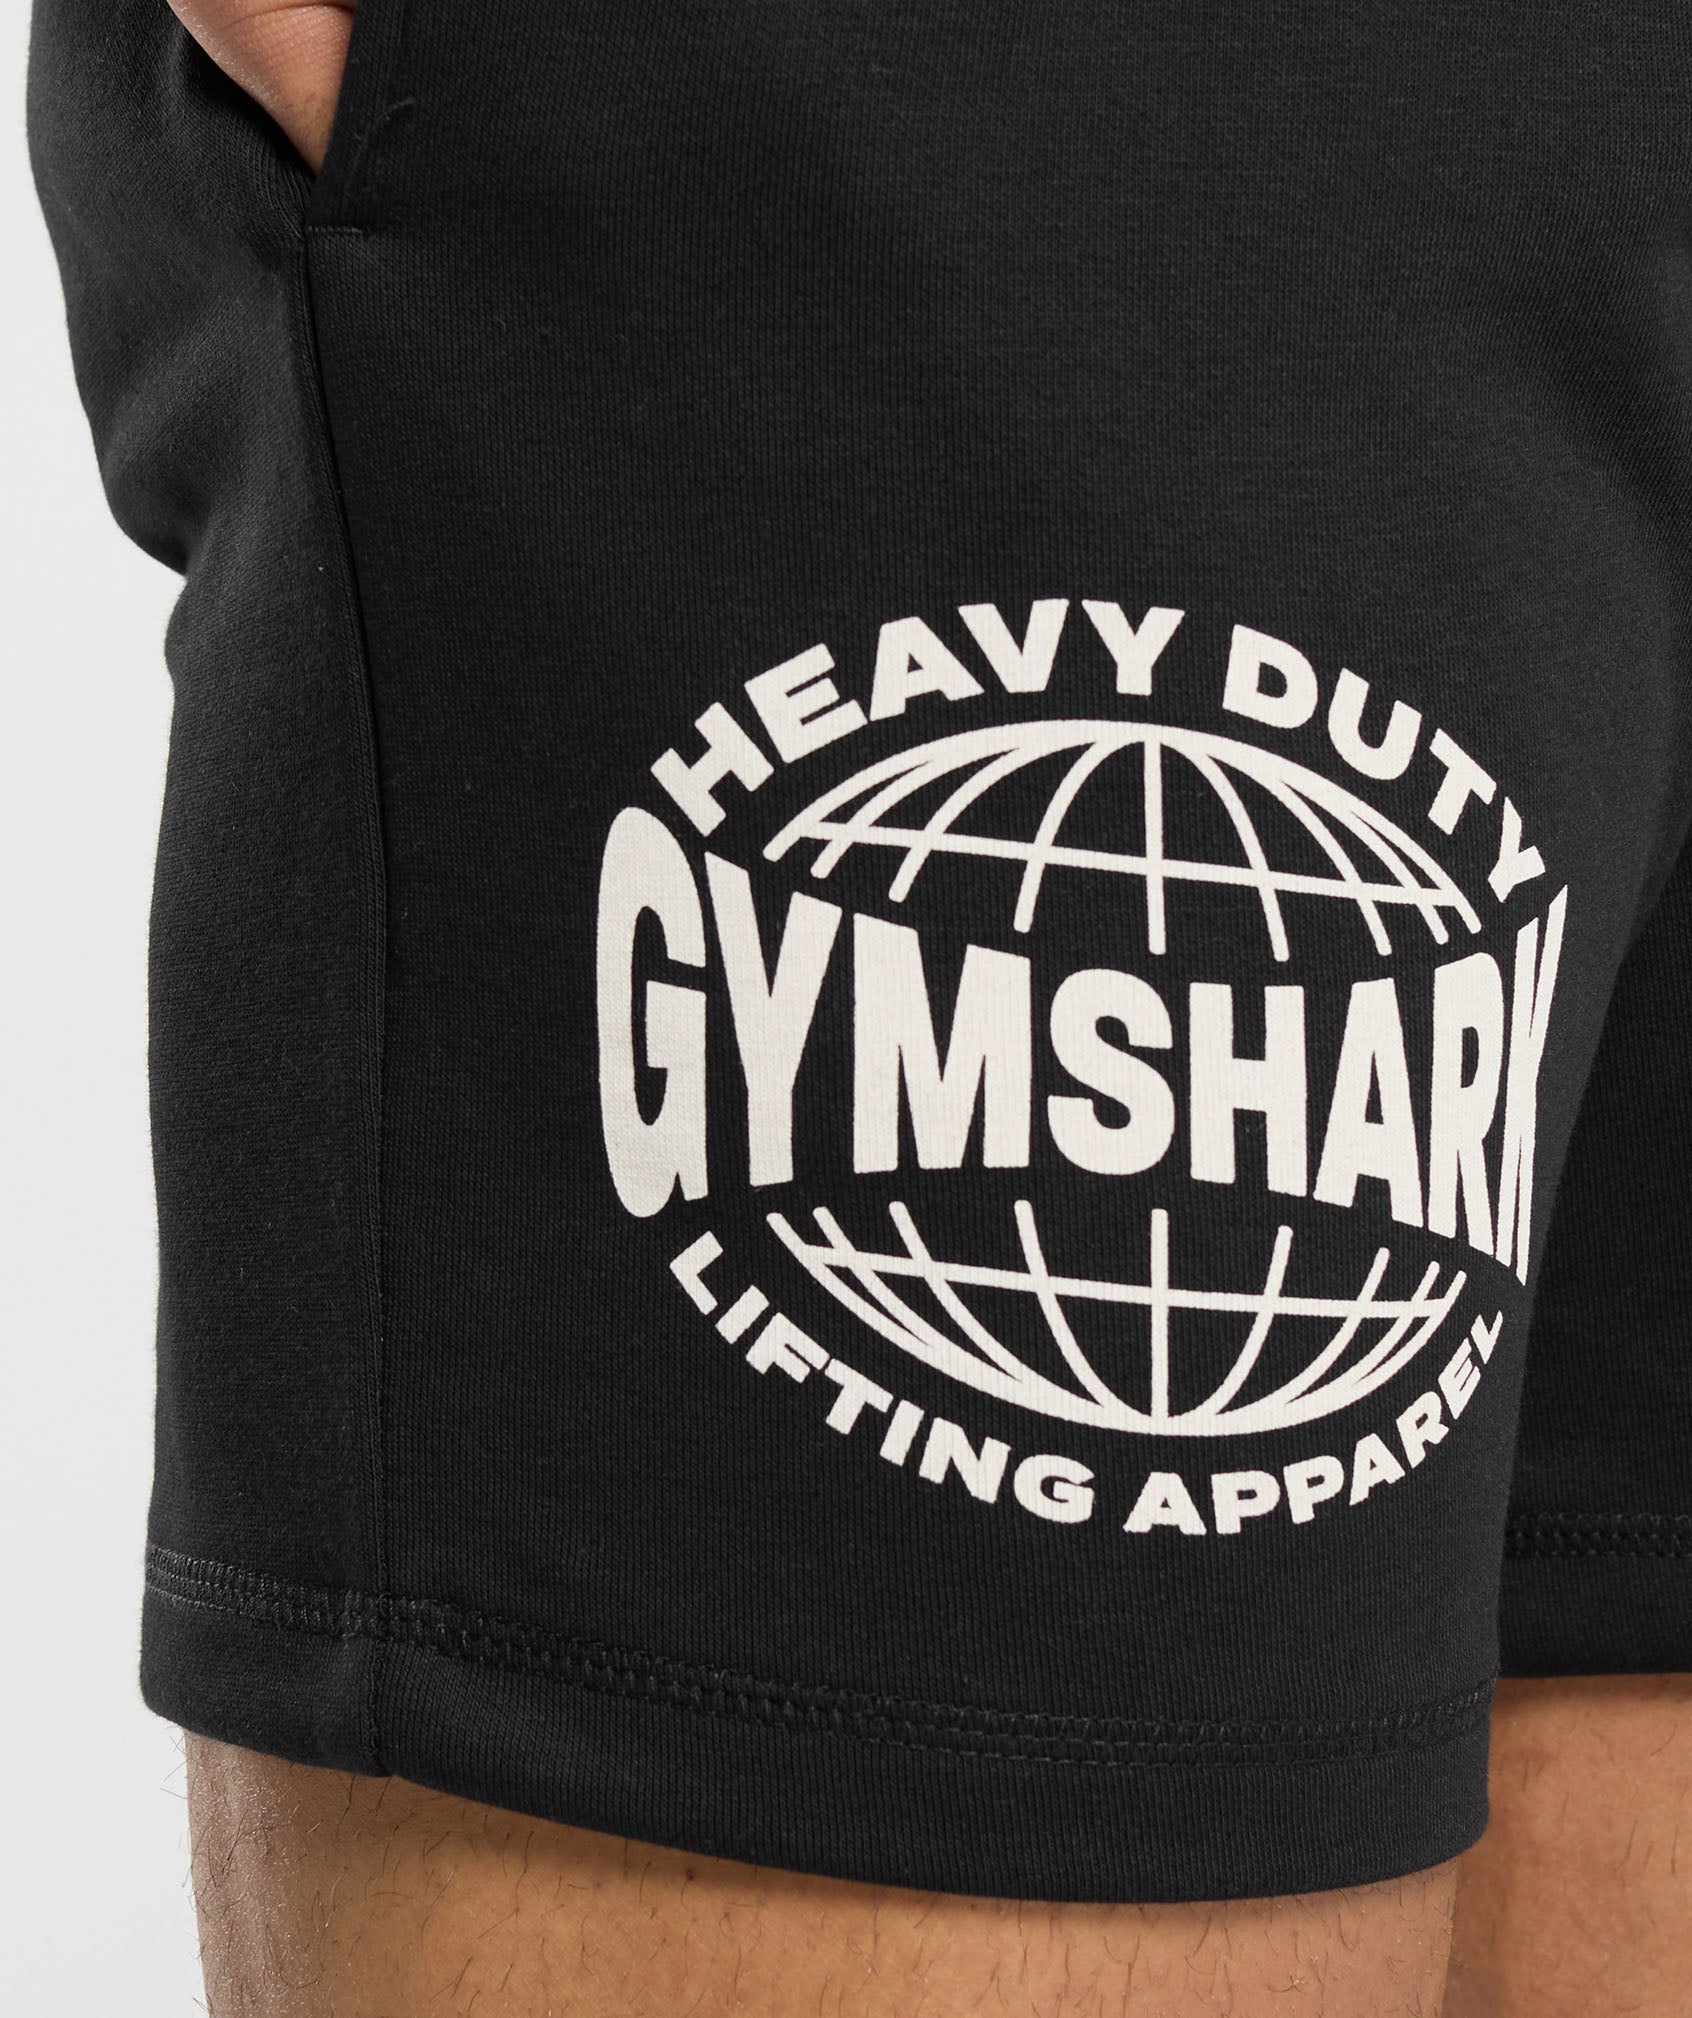 Heavy Duty Apparel 7" Shorts in Black - view 5